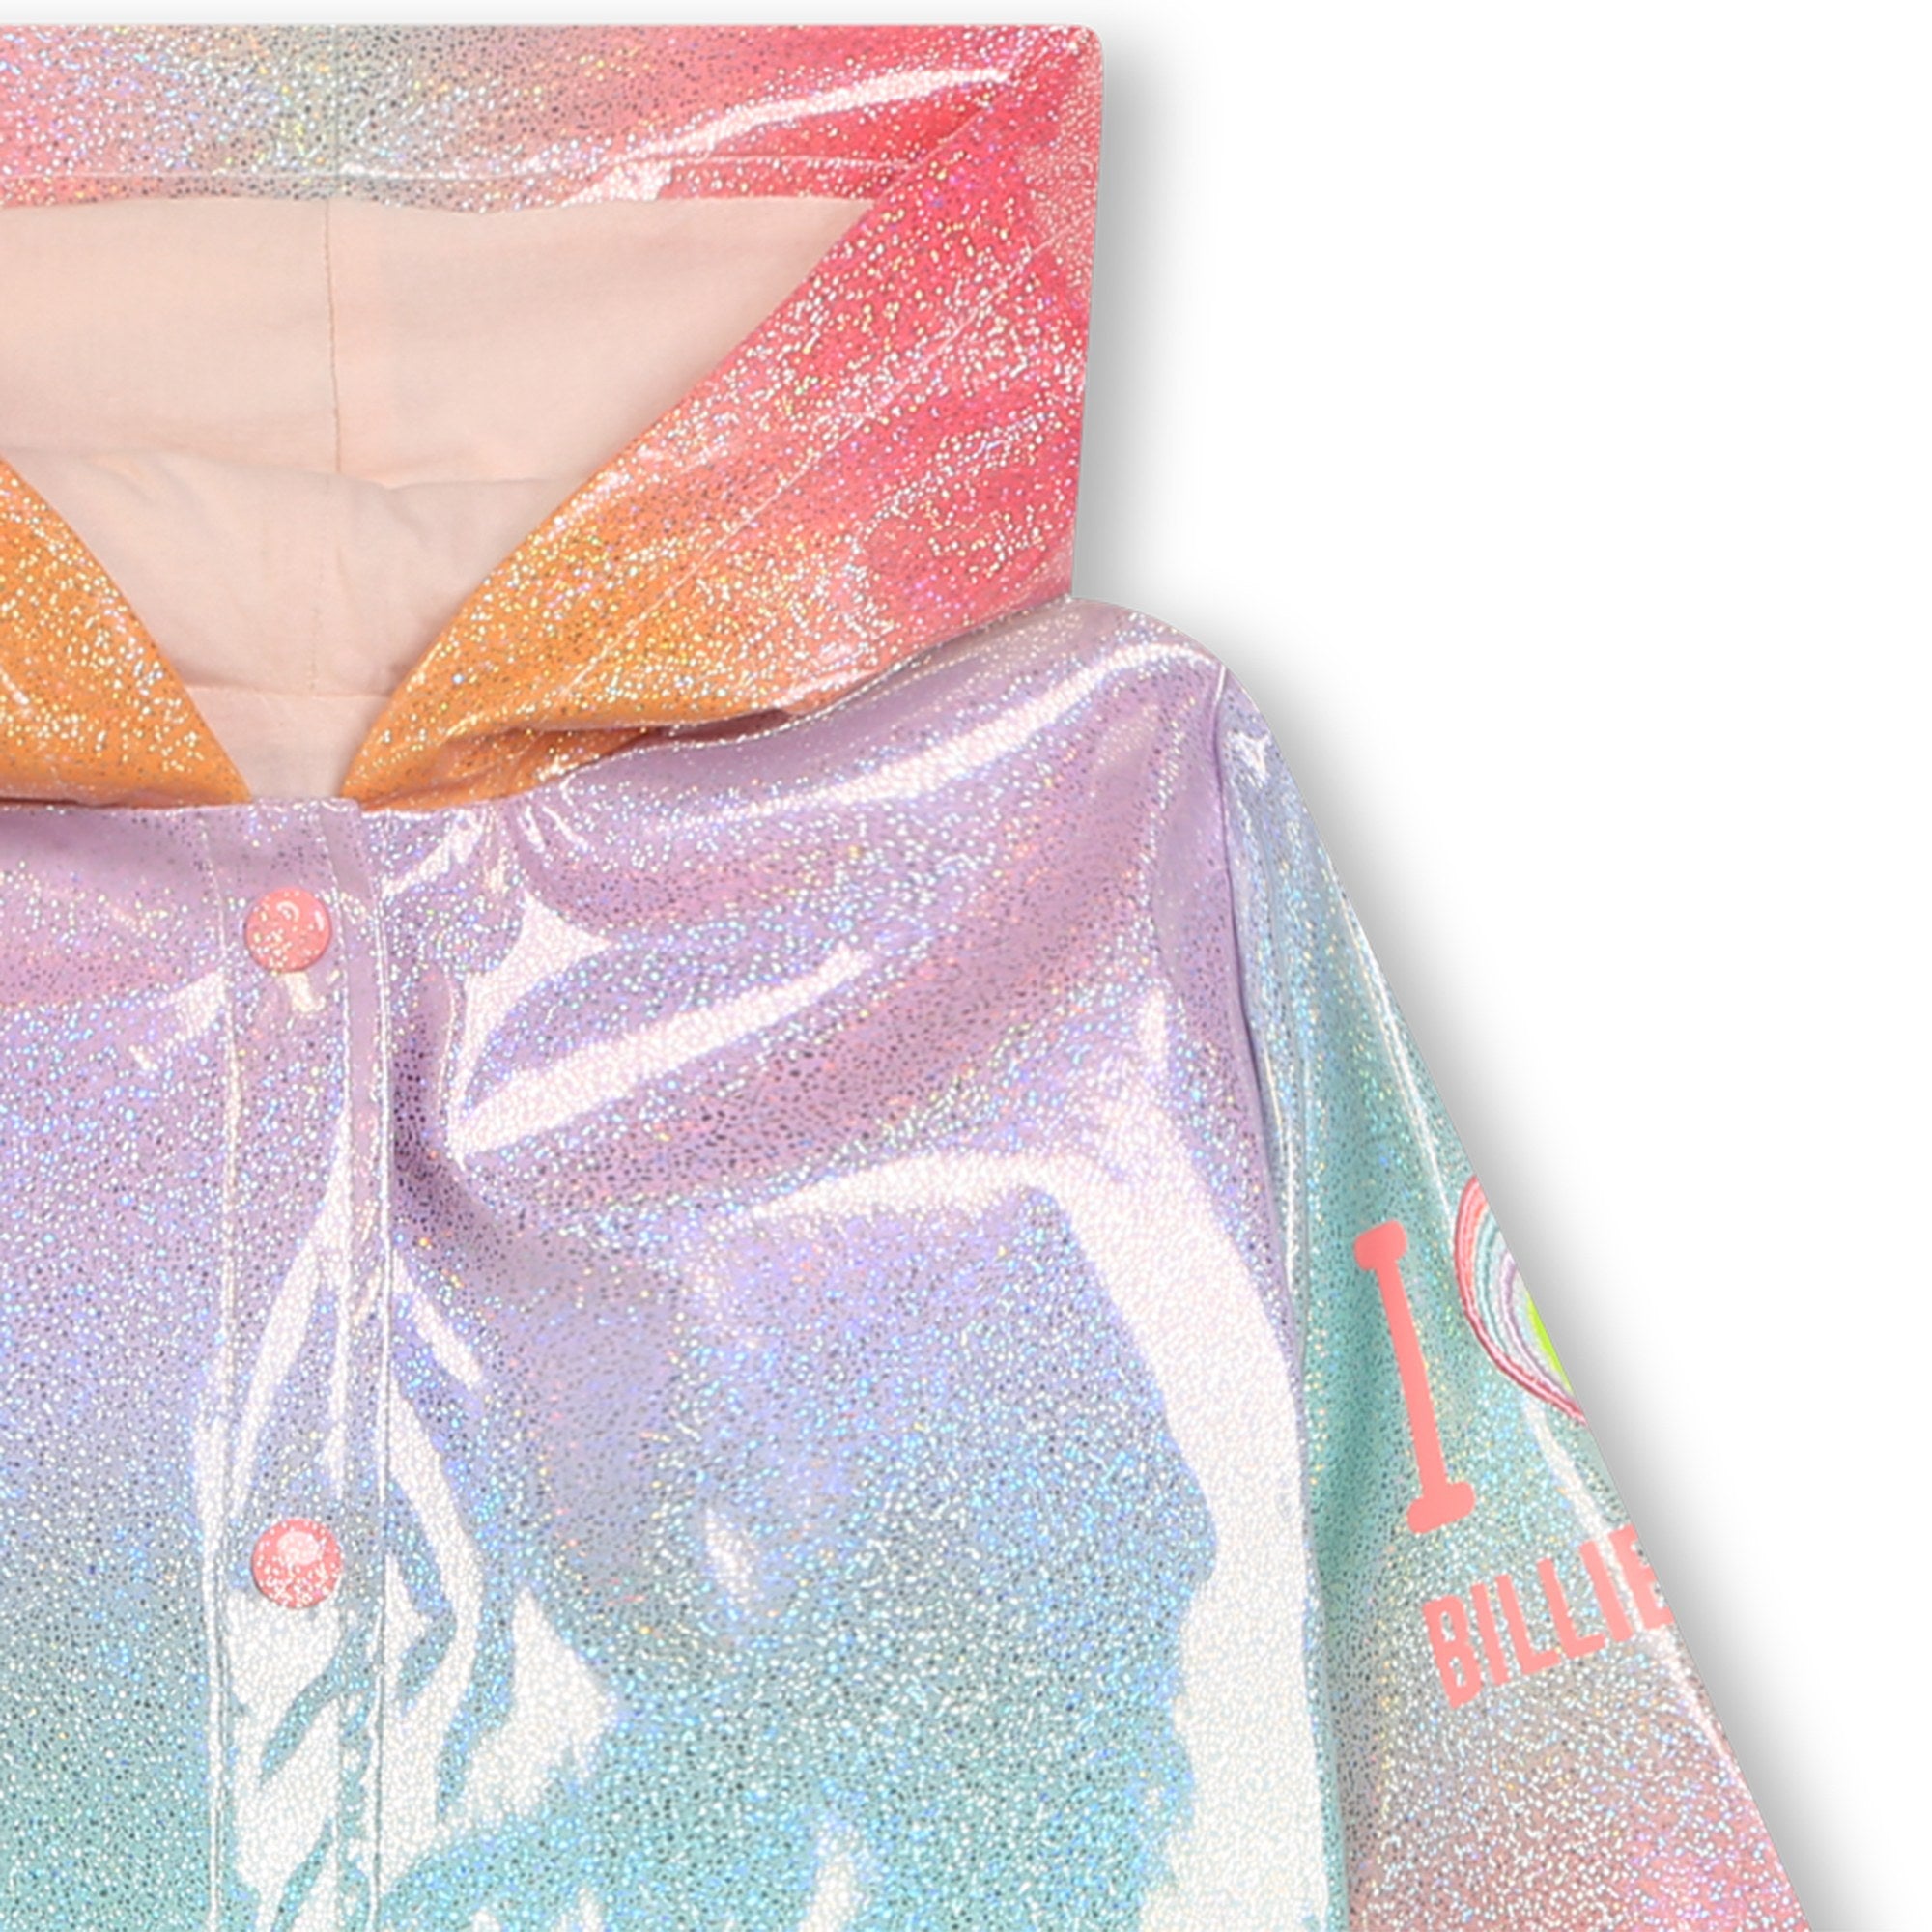 Girls Pink Rainbow Glitter Raincoat